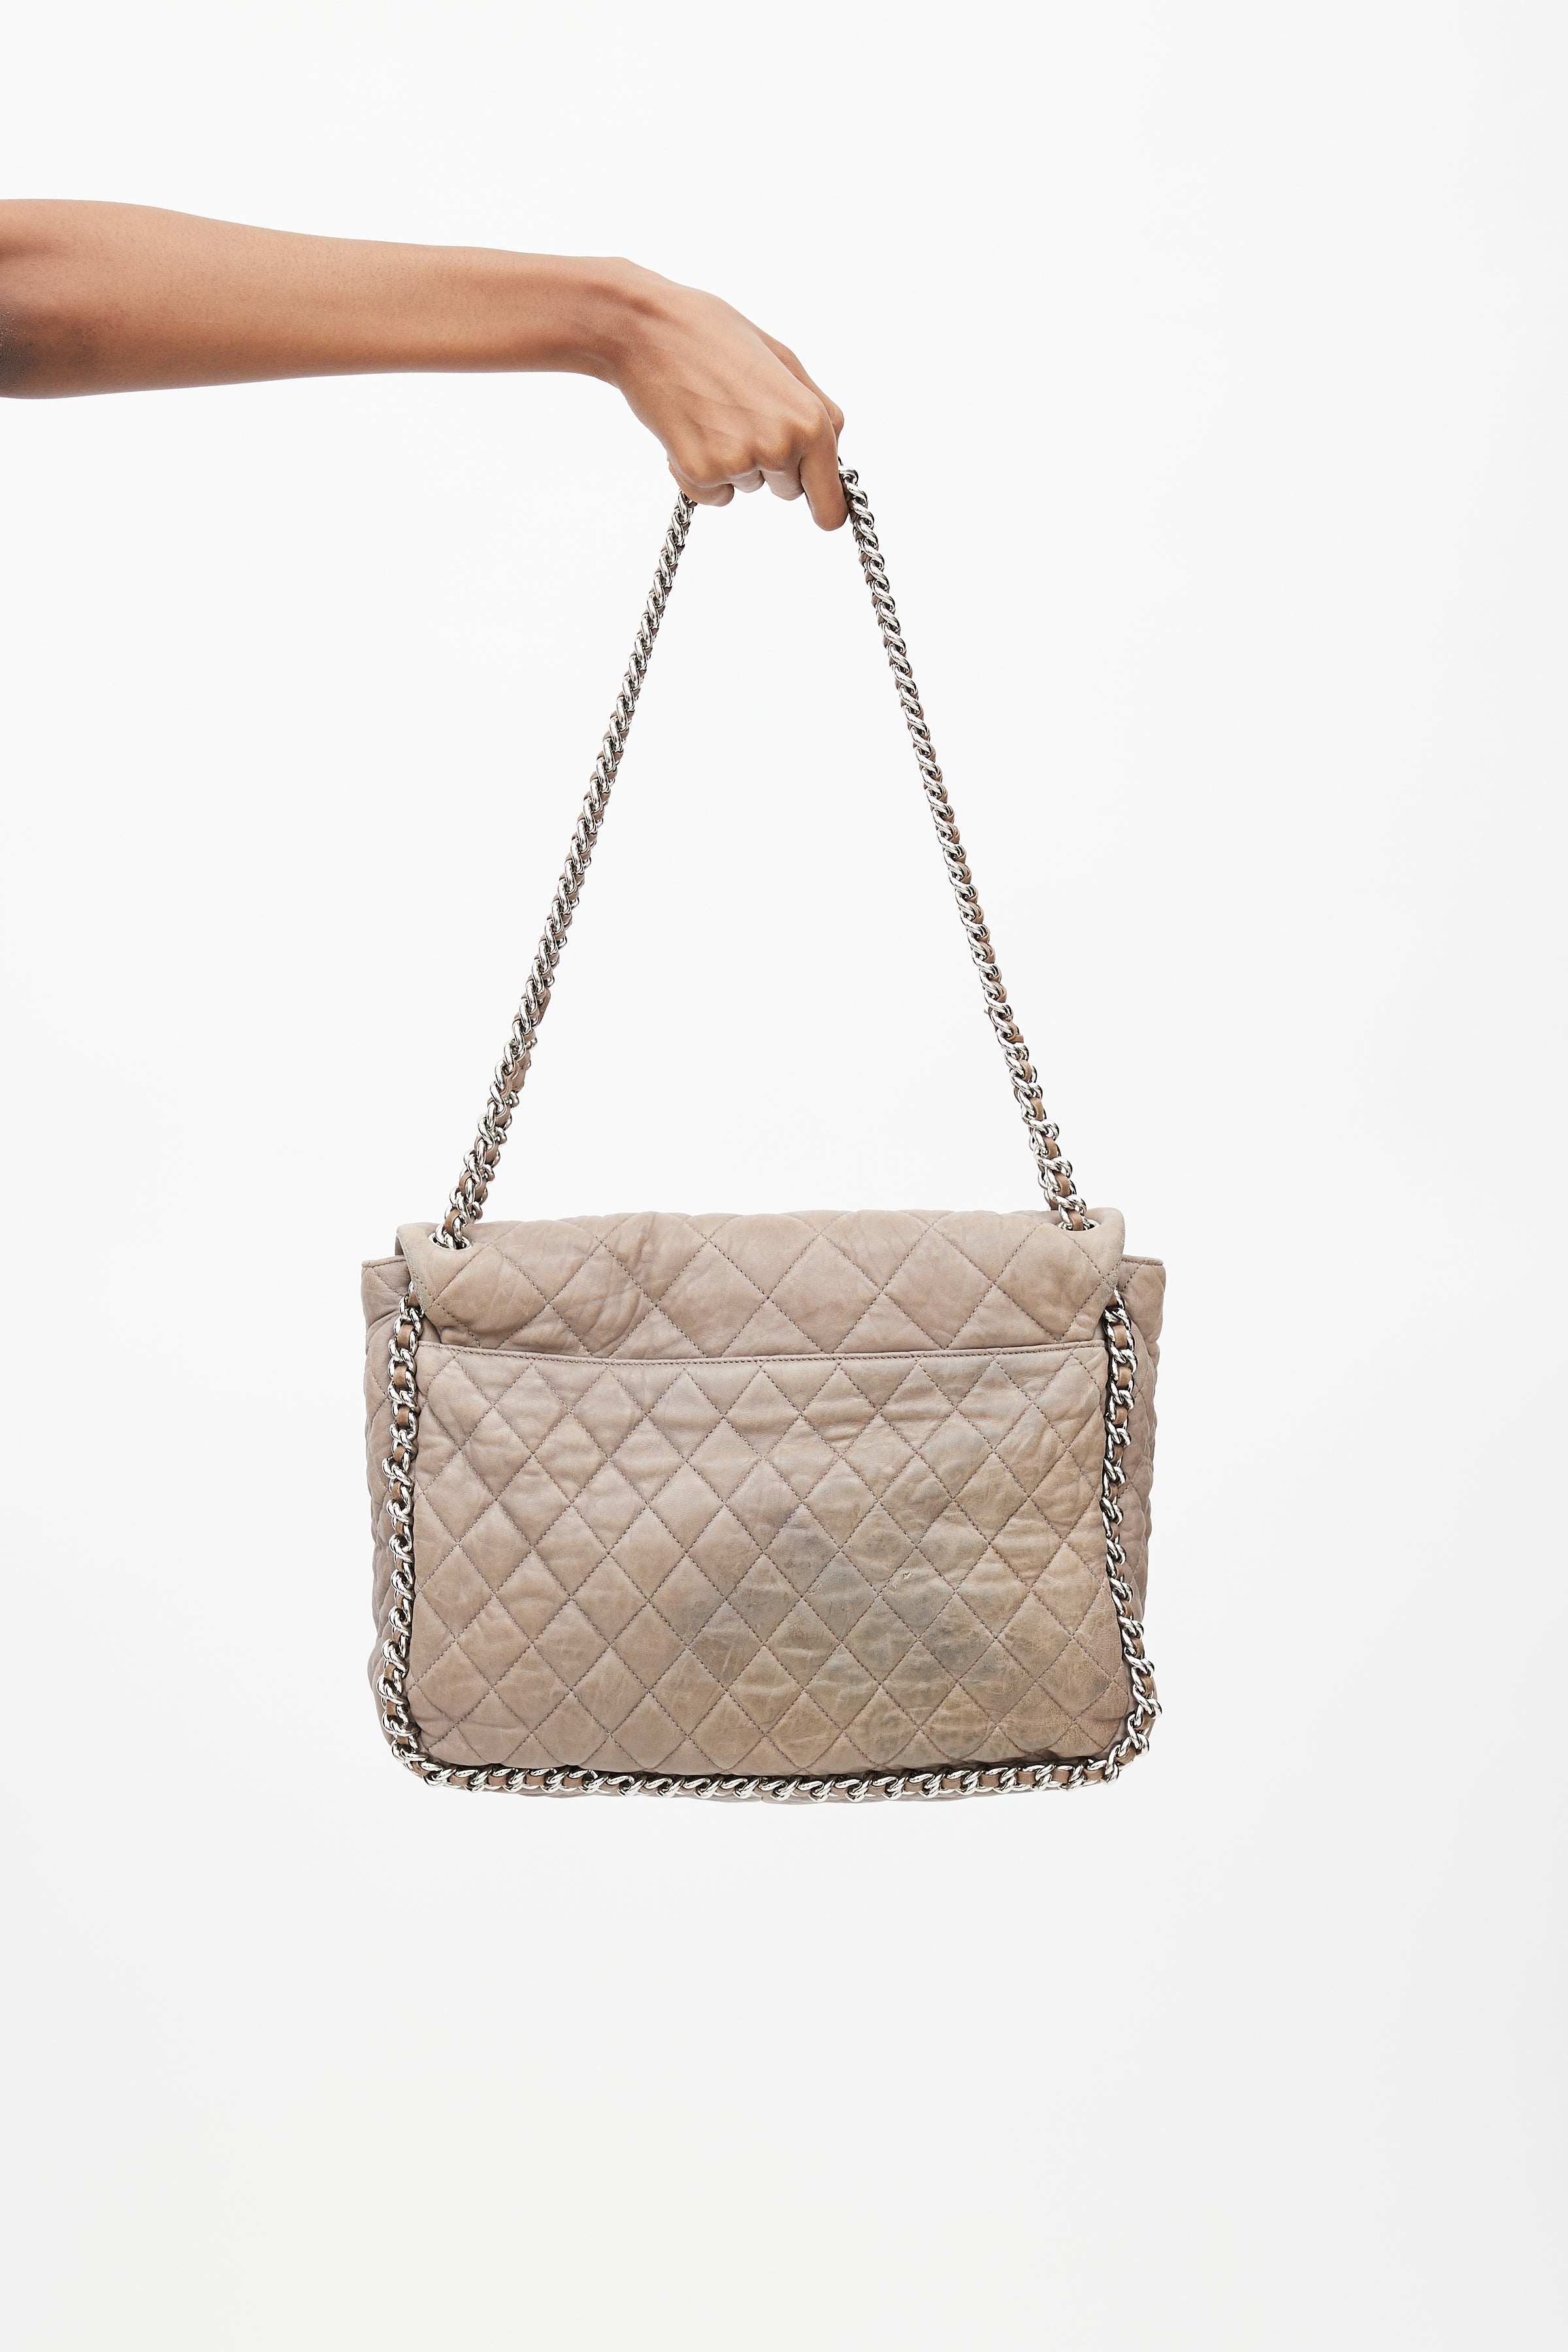 Chanel // 2010 Grey Leather Chain Around Shoulder Bag – VSP 